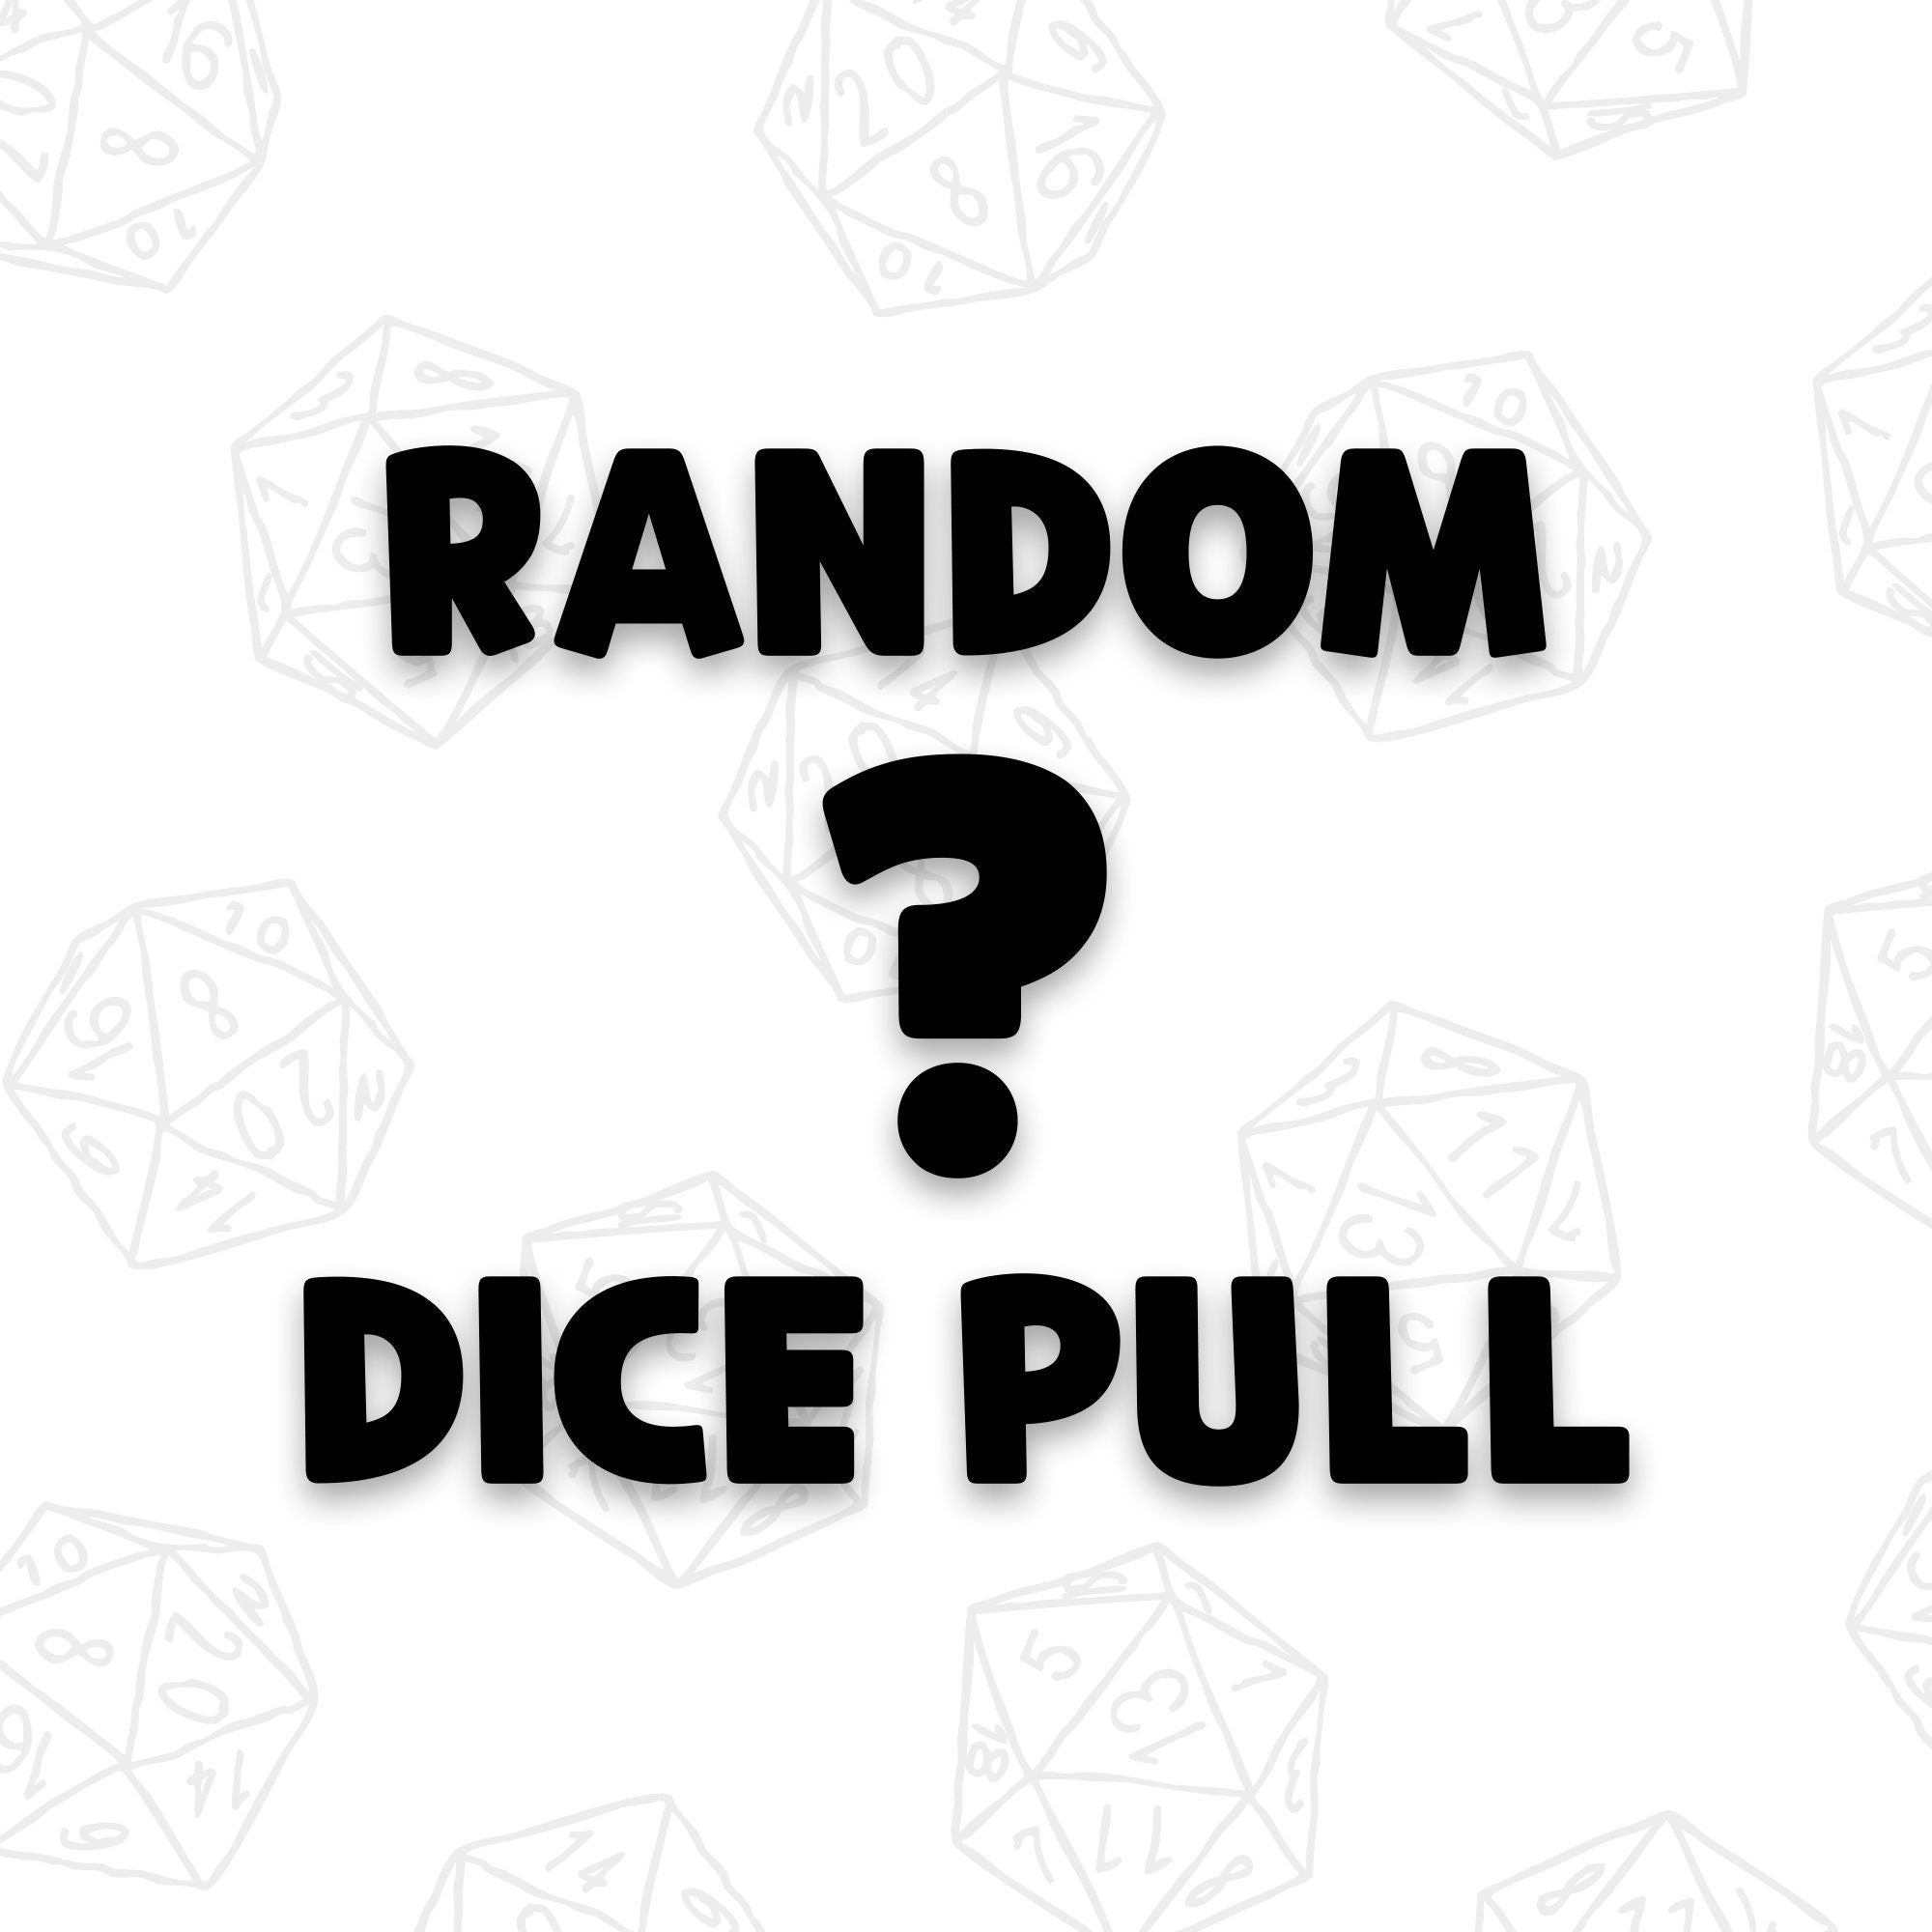 Random Mixed DND/TTRPG Dice set - Dicemaniac